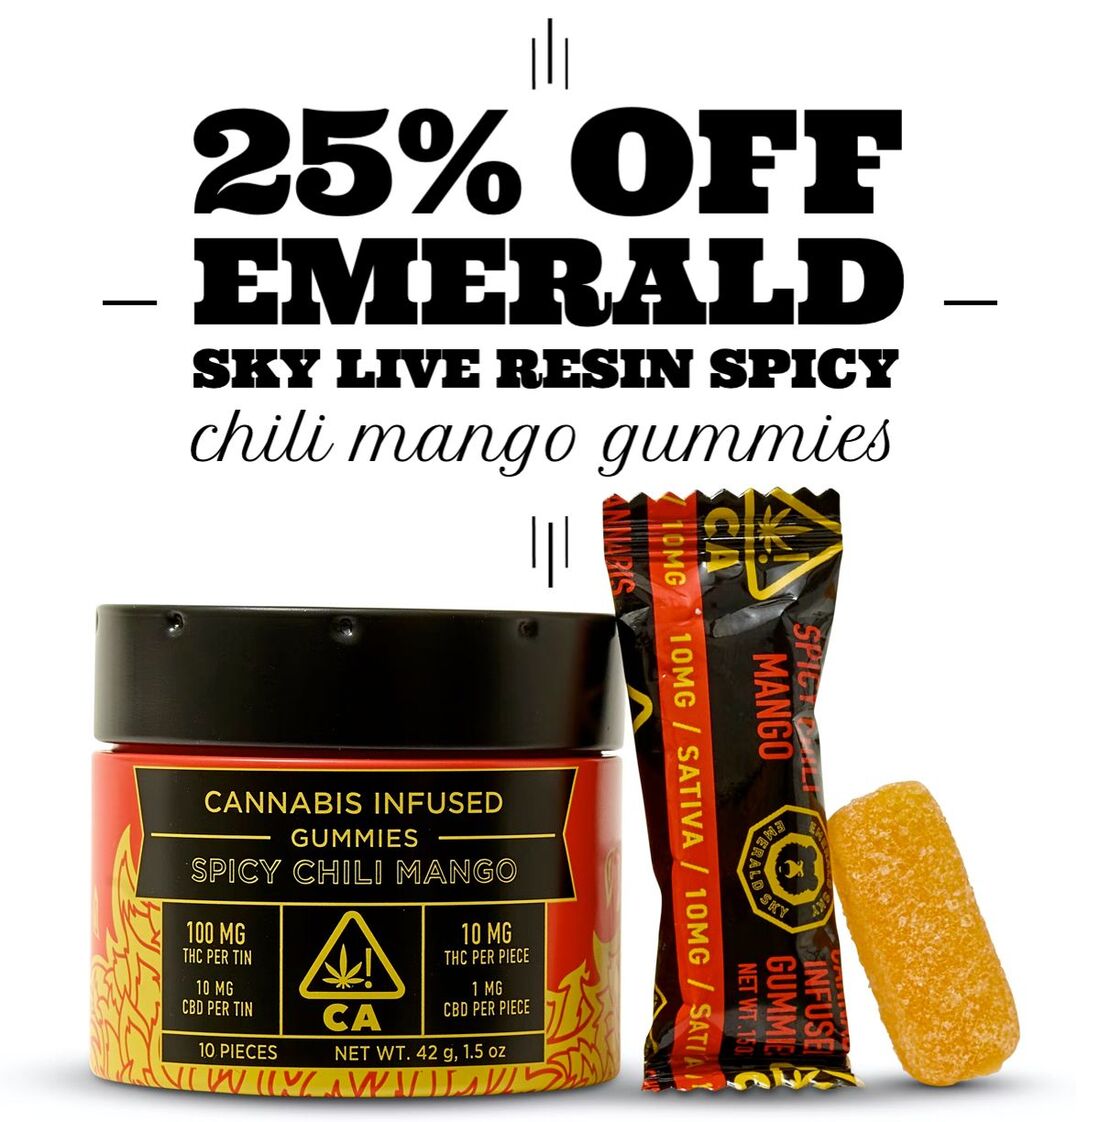 25% Off Emerald Sky Live Resin Spicy Chili Mango Gummies